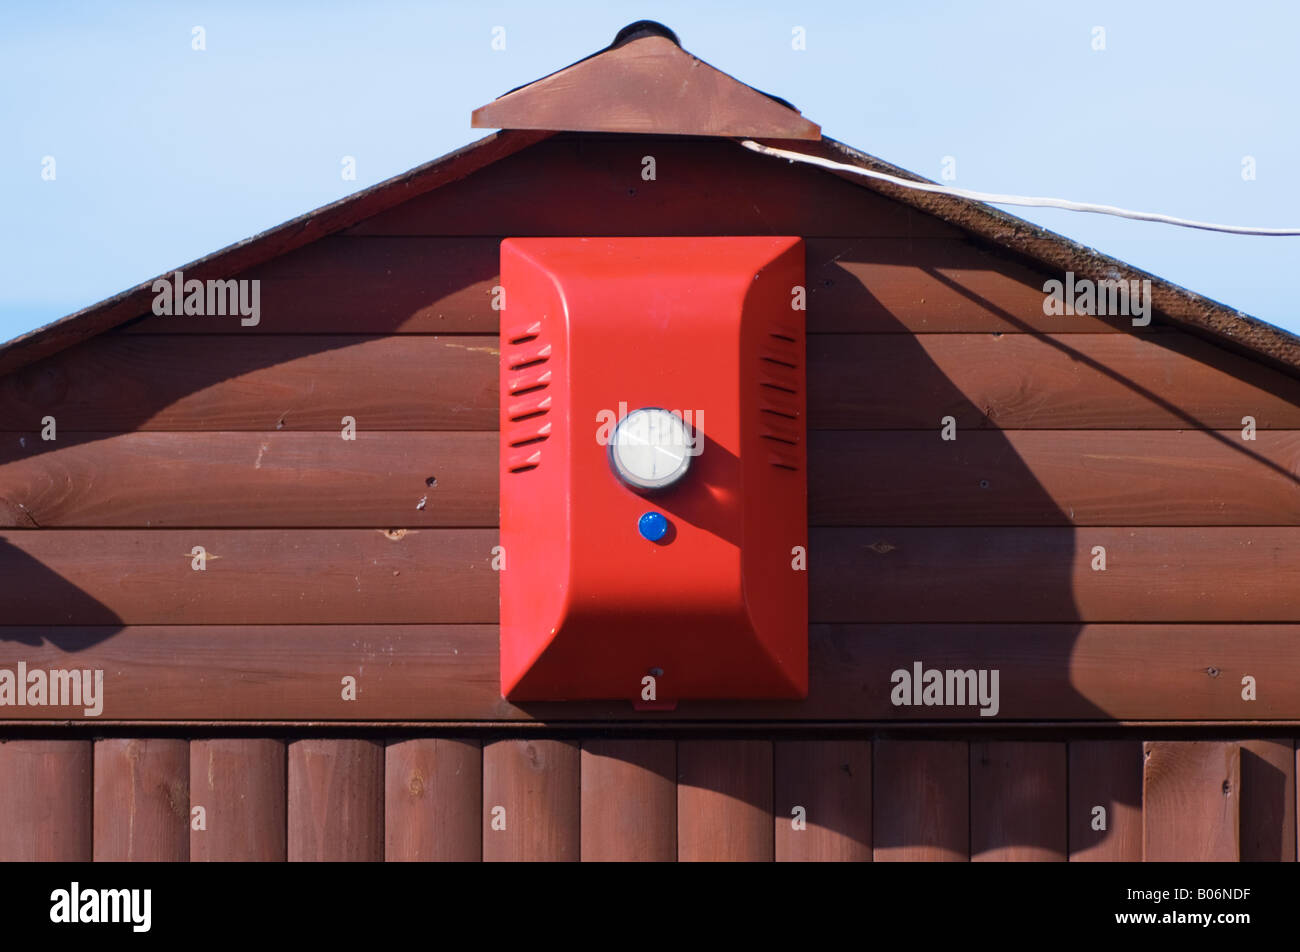 Red alarm box on apex Stock Photo